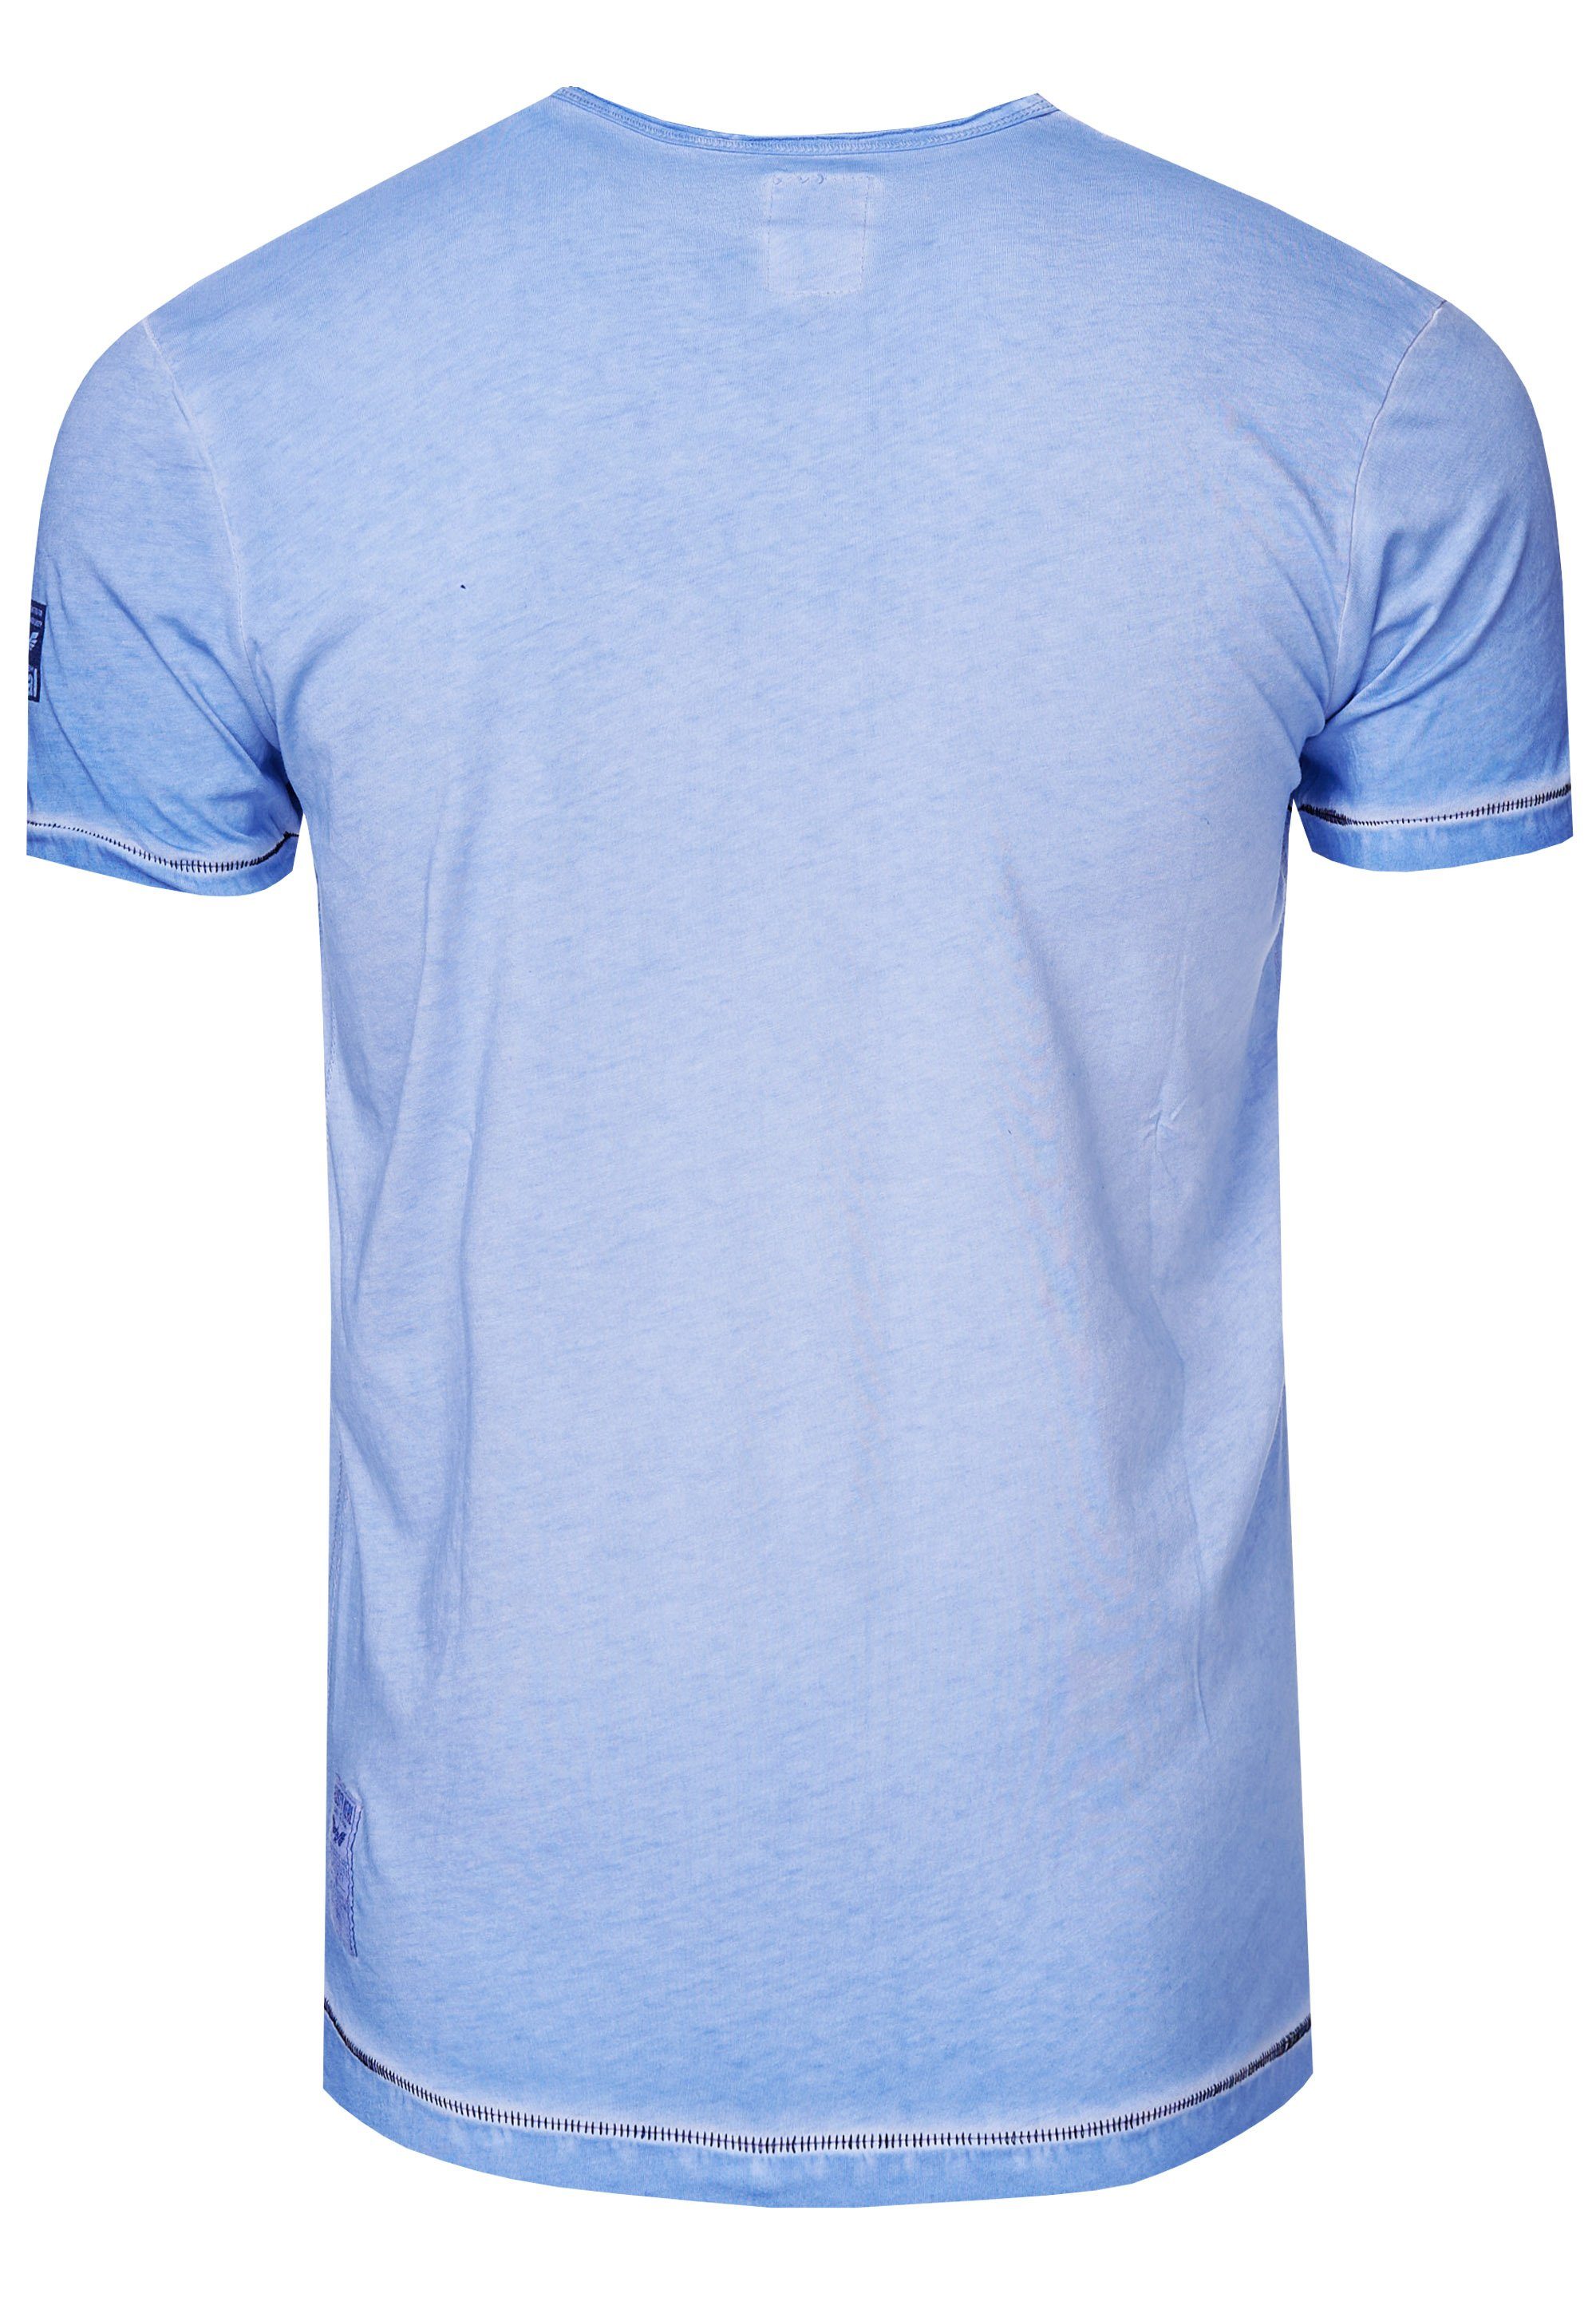 Rusty Neal T-Shirt Vintage-Look trendigen blau im